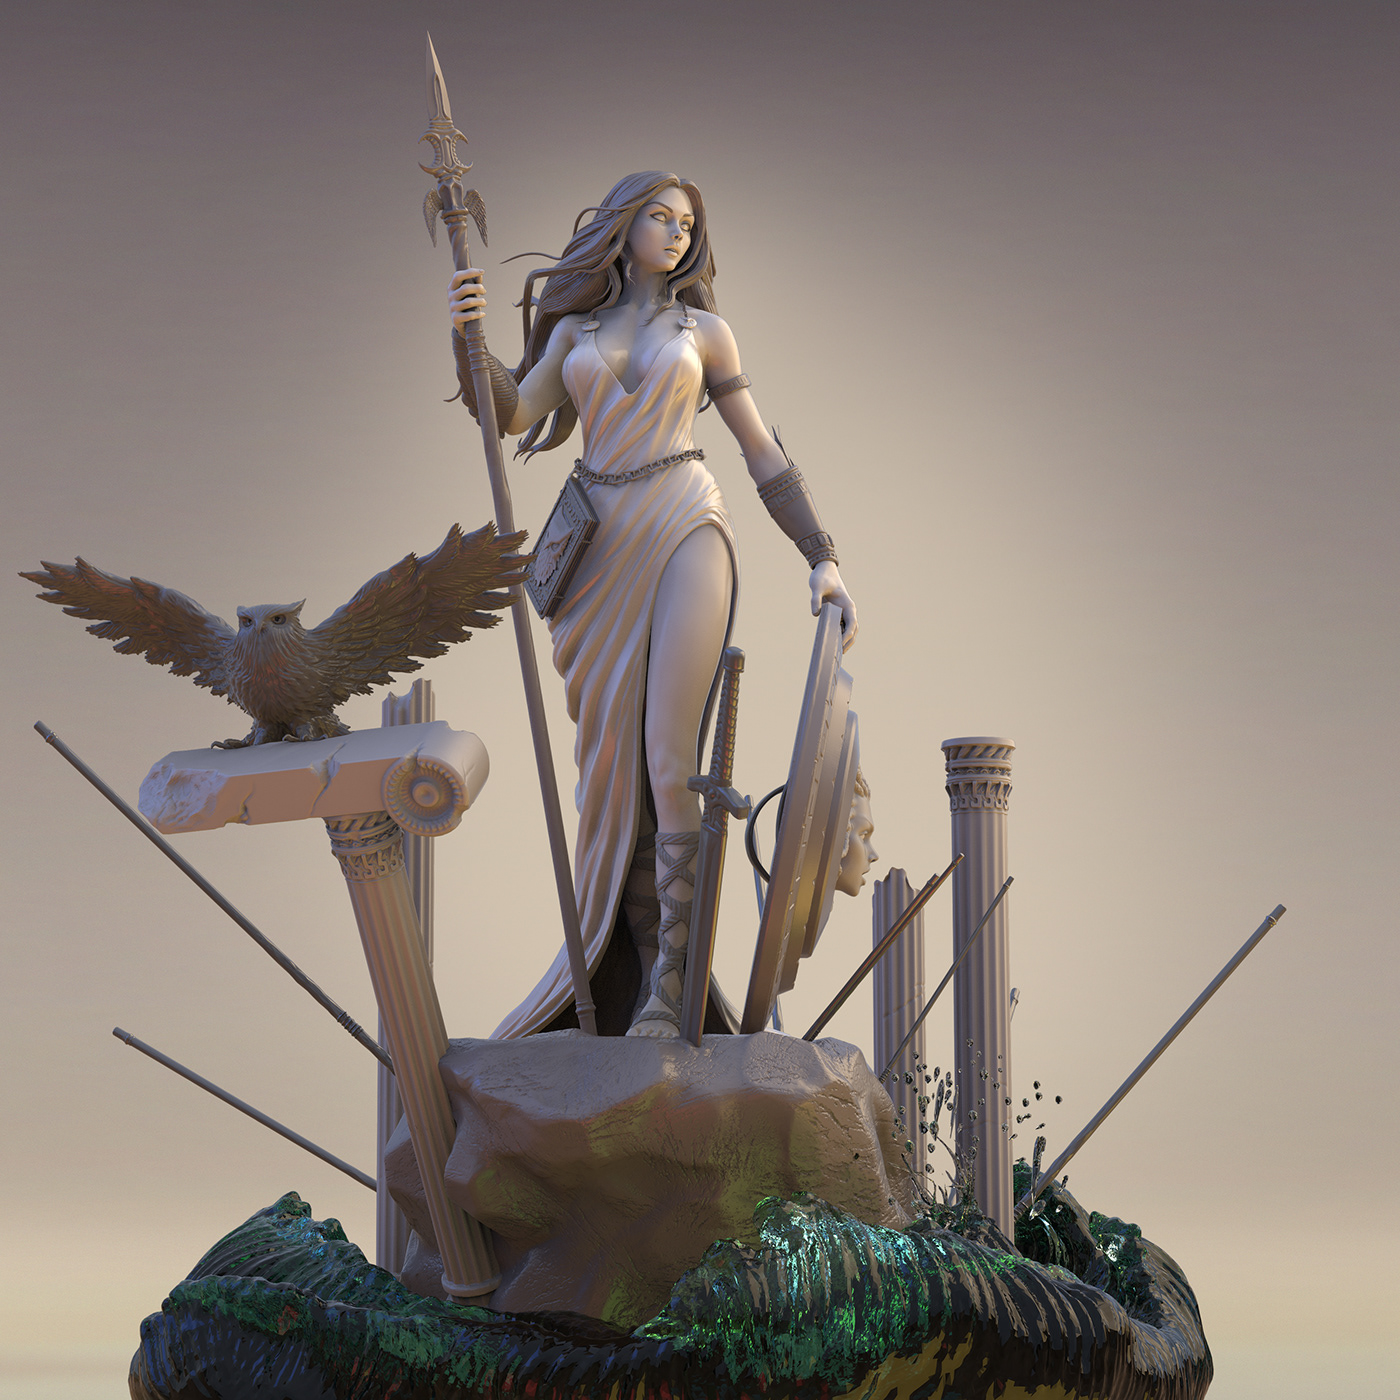 19. Athena Goddess of war and wisdom. 